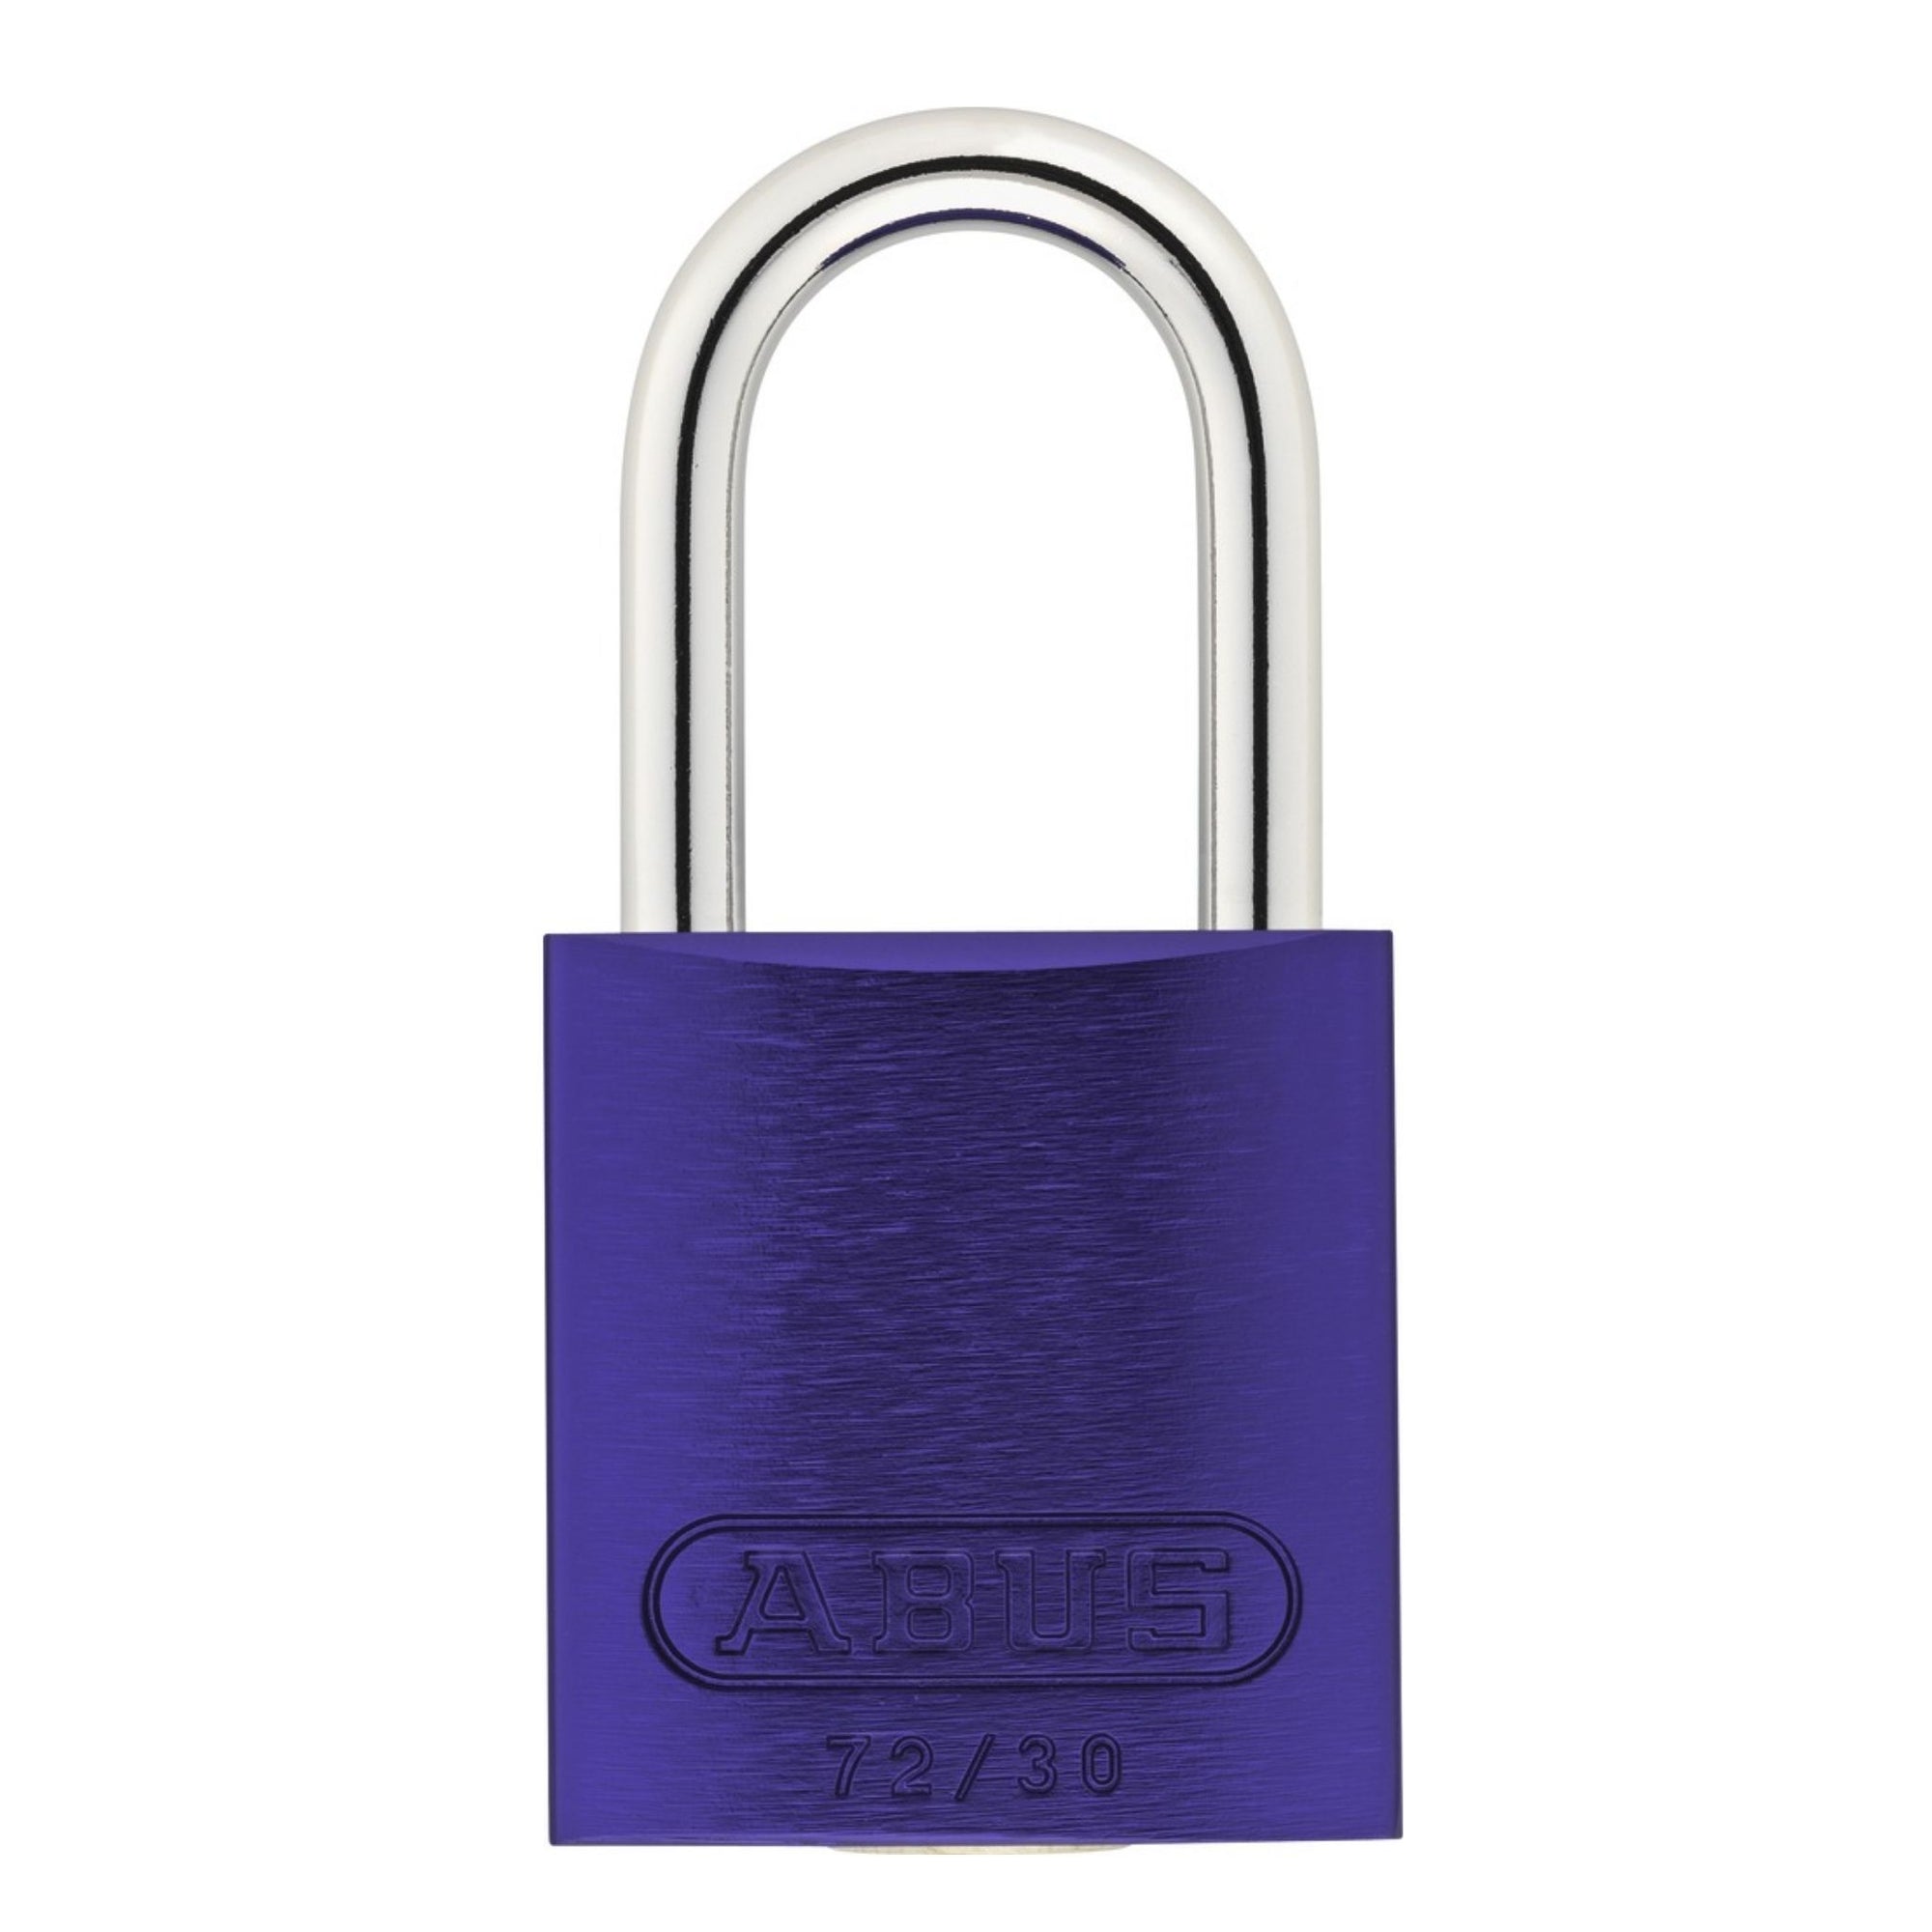 Abus 72/30 KD Purple Aluminum Safety Padlock - The Lock Source